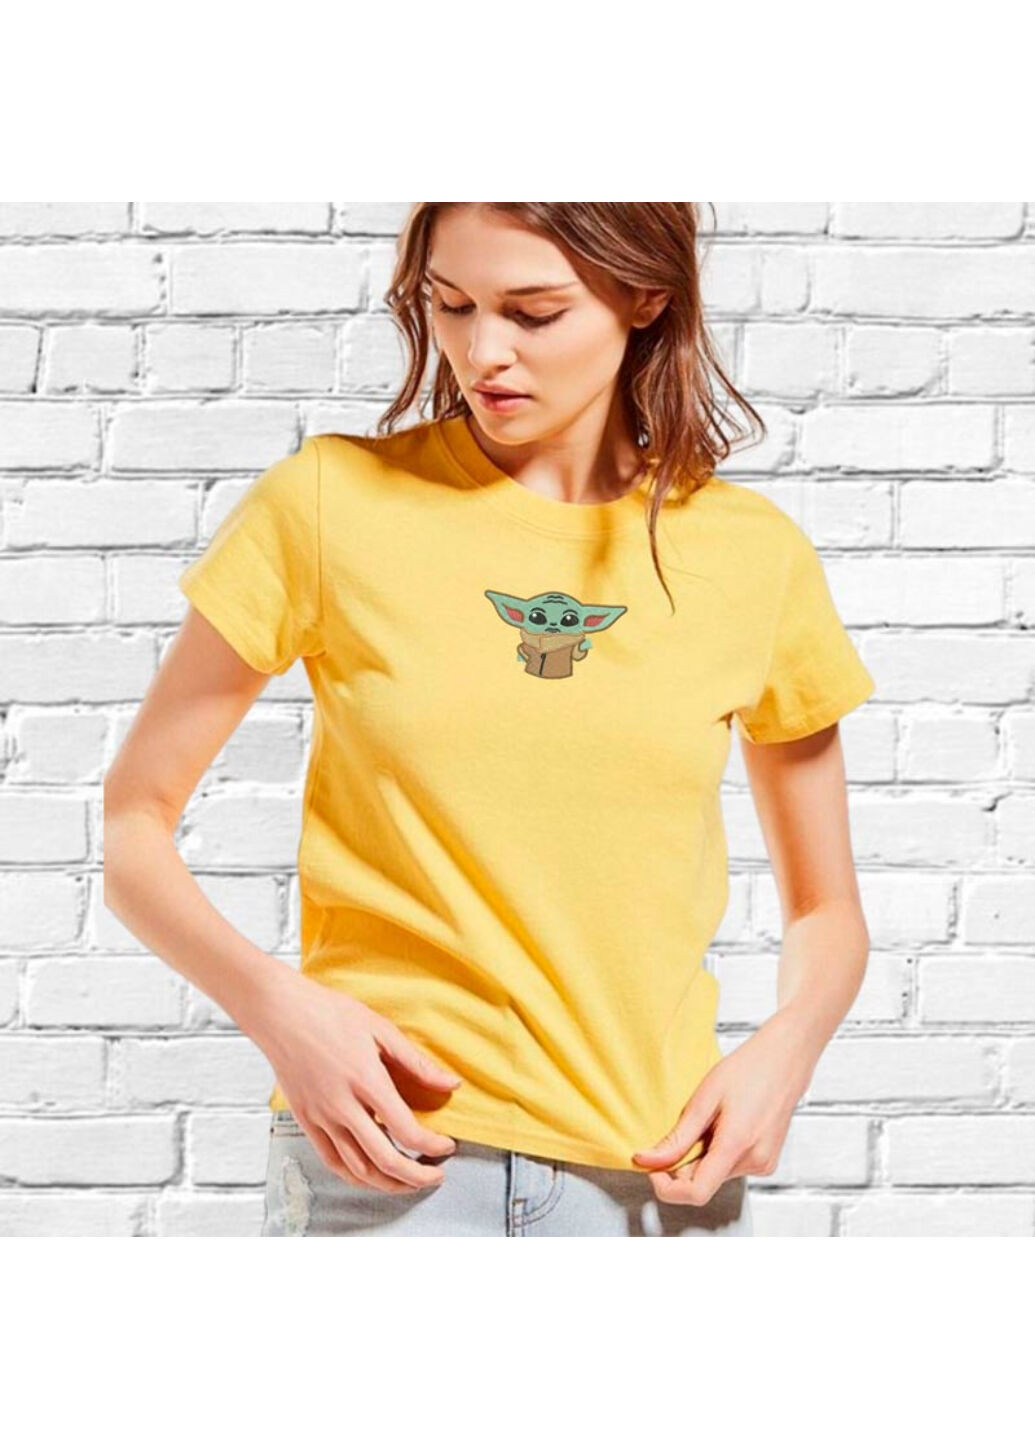 Желтая футболка з вишивкою йода (yoda) 01 женская желтый m No Brand